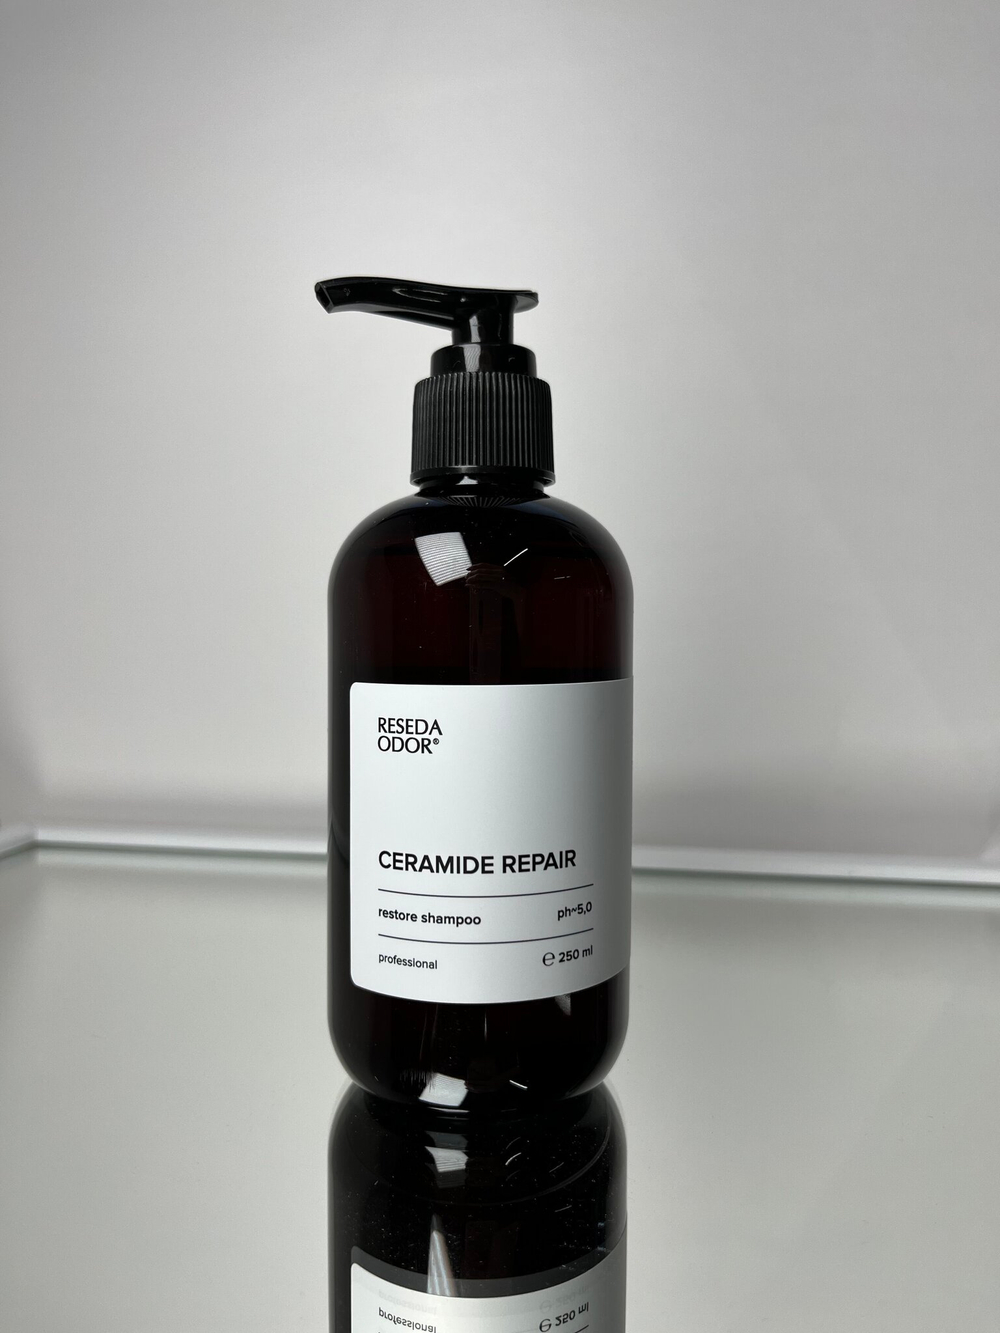 Ceramide repair. Restore shampoo 5%. рН~5,0